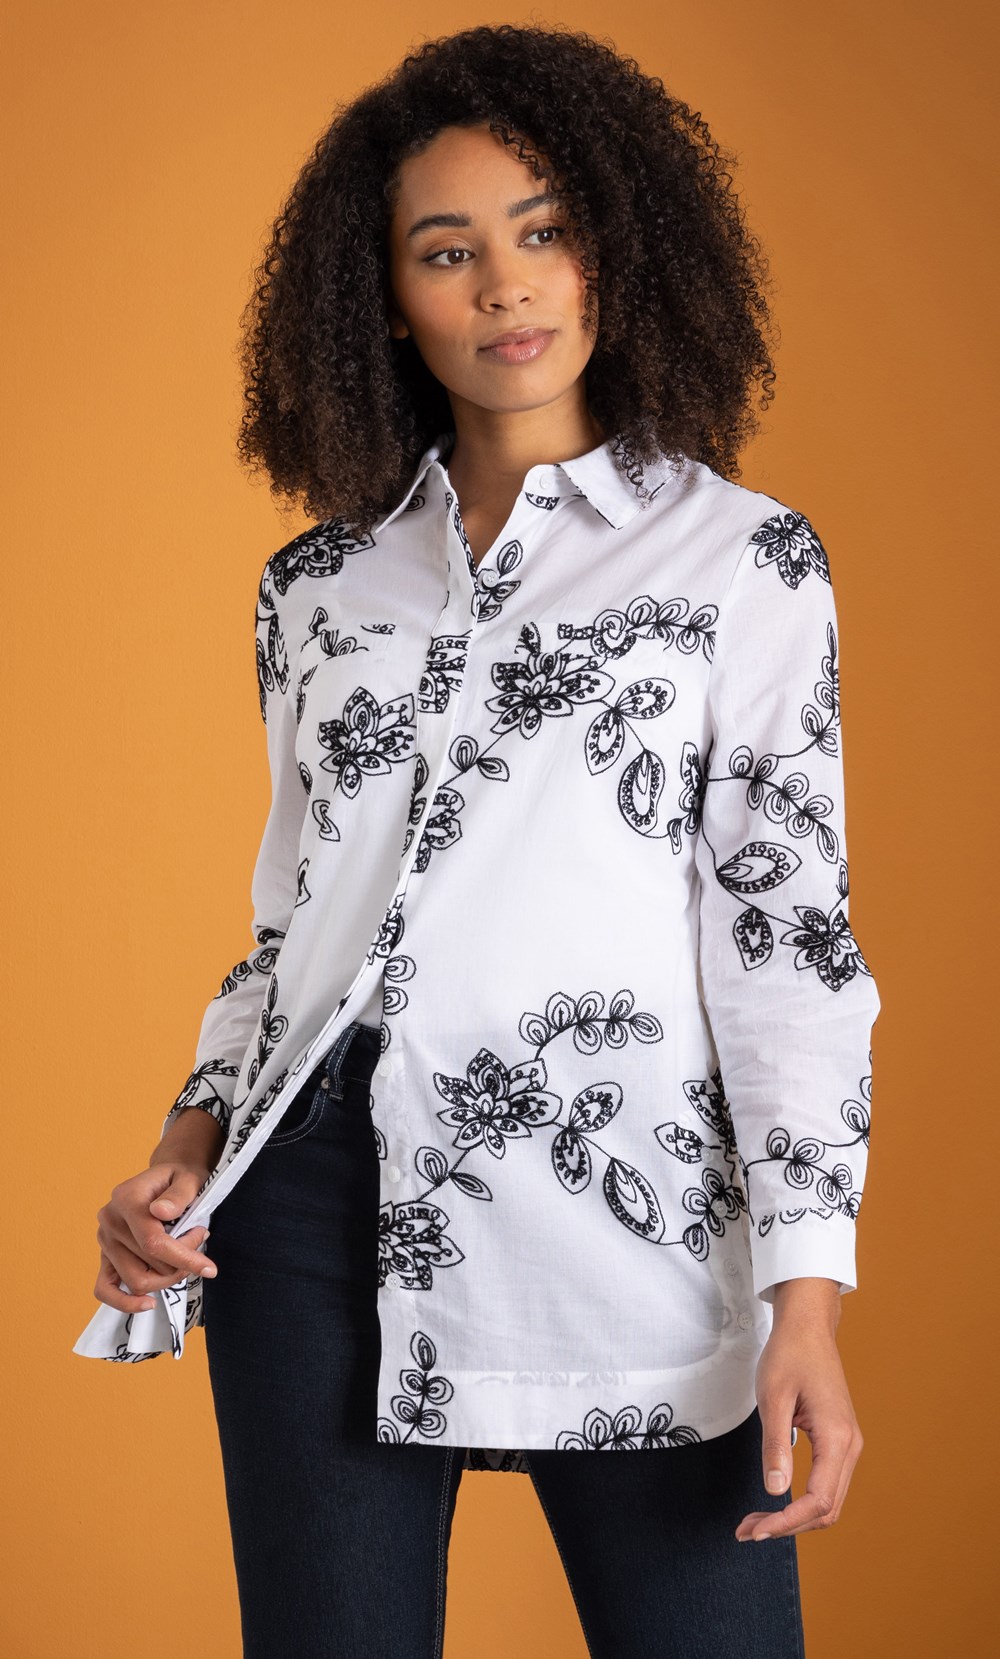 Brands - Klass Floral Embroidered Cotton Blouse White/Black Women’s